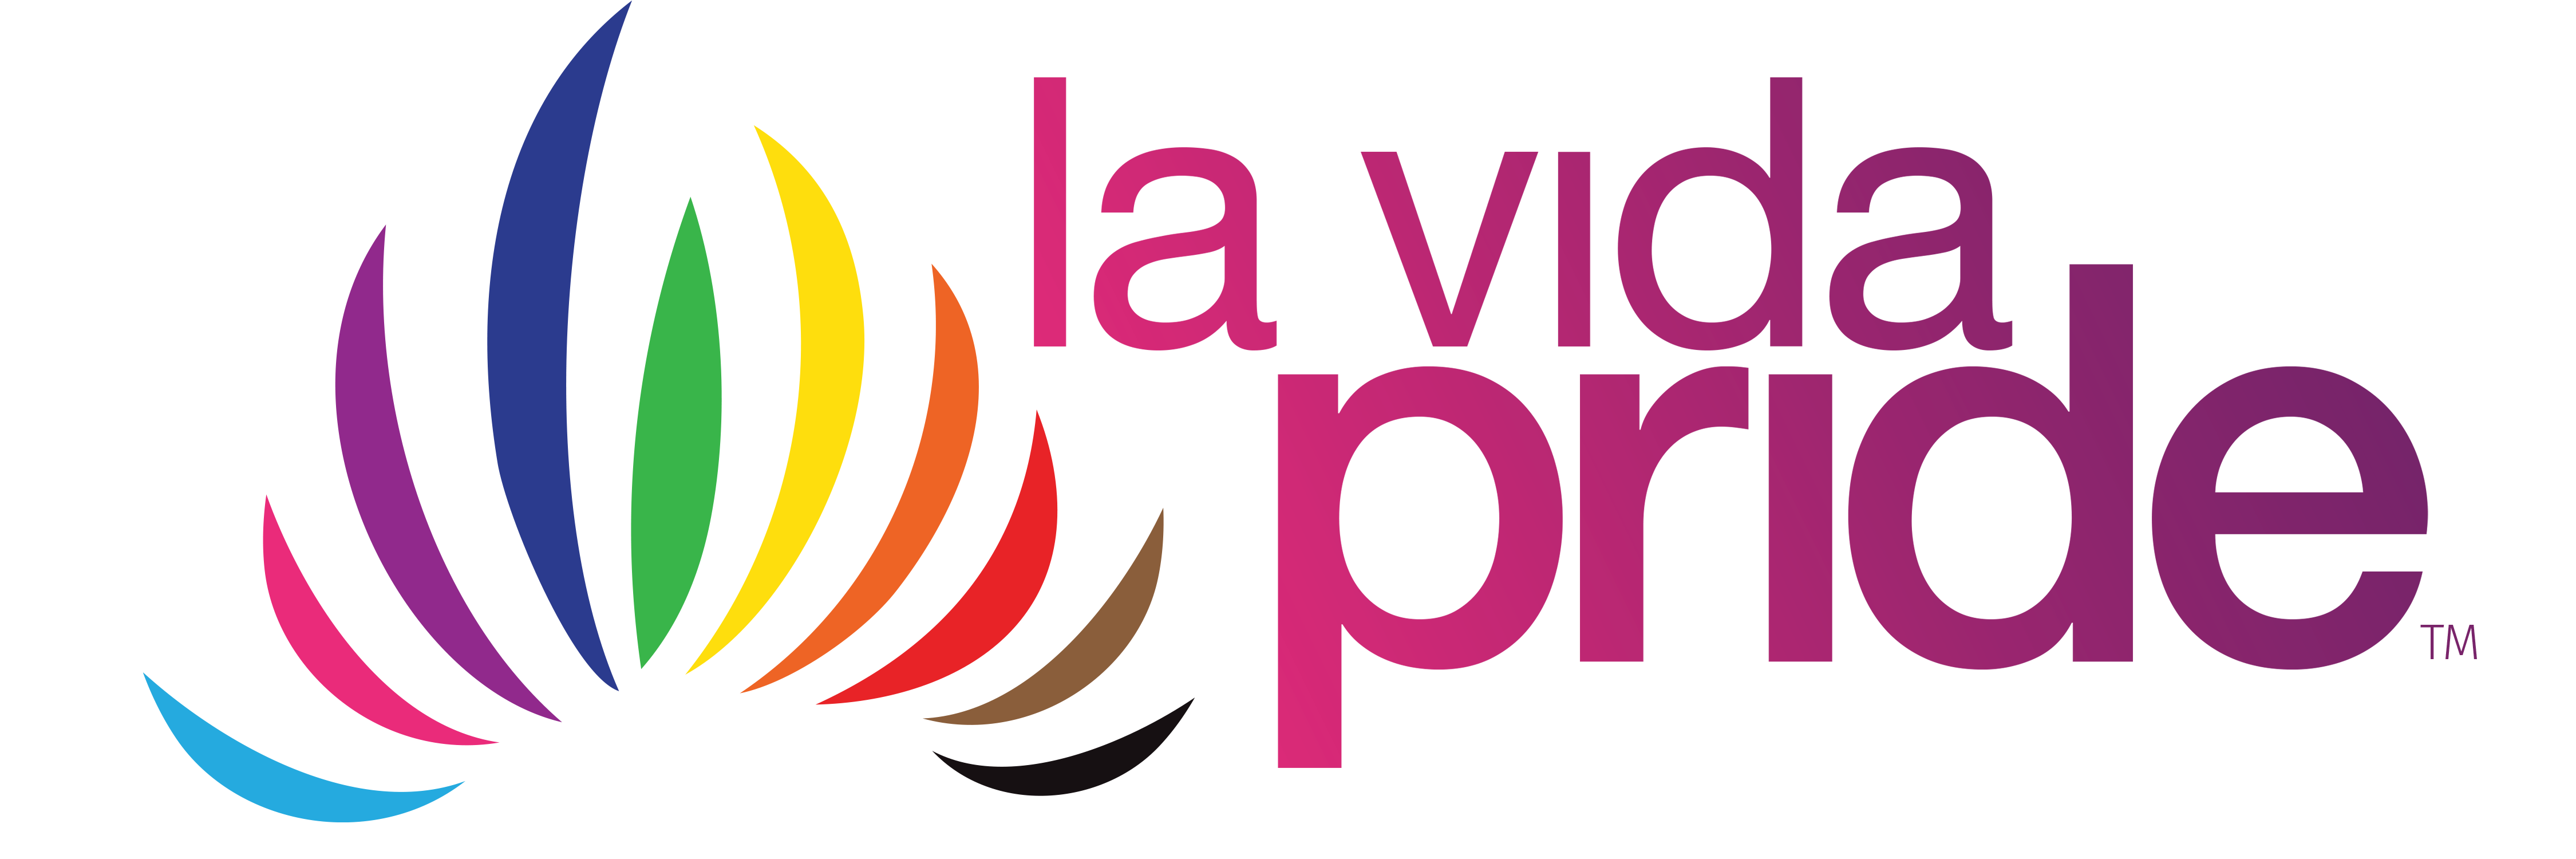 La Vida Pride: LGBTQ+ eCommunity Center for Active Agers